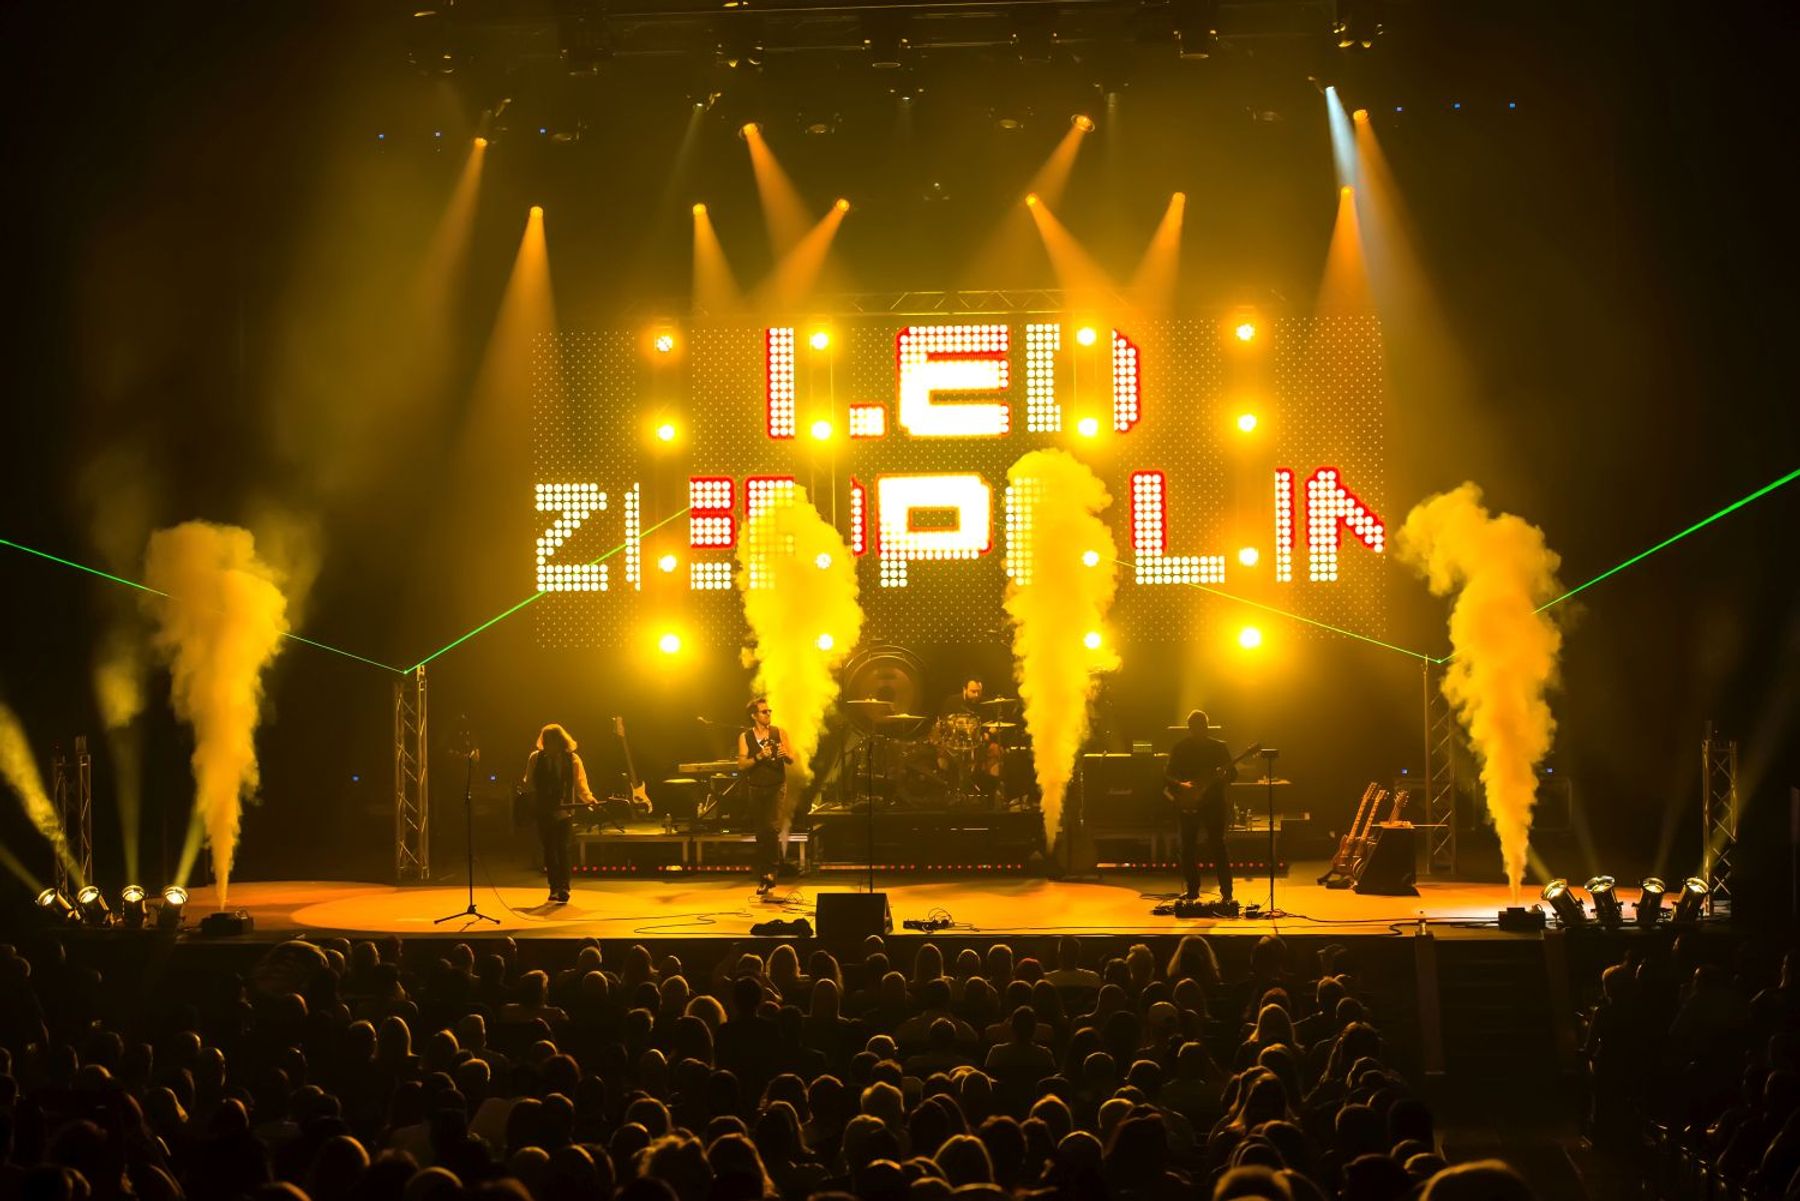 ZEPPELIN USA - An American Tribute To Led Zeppelin